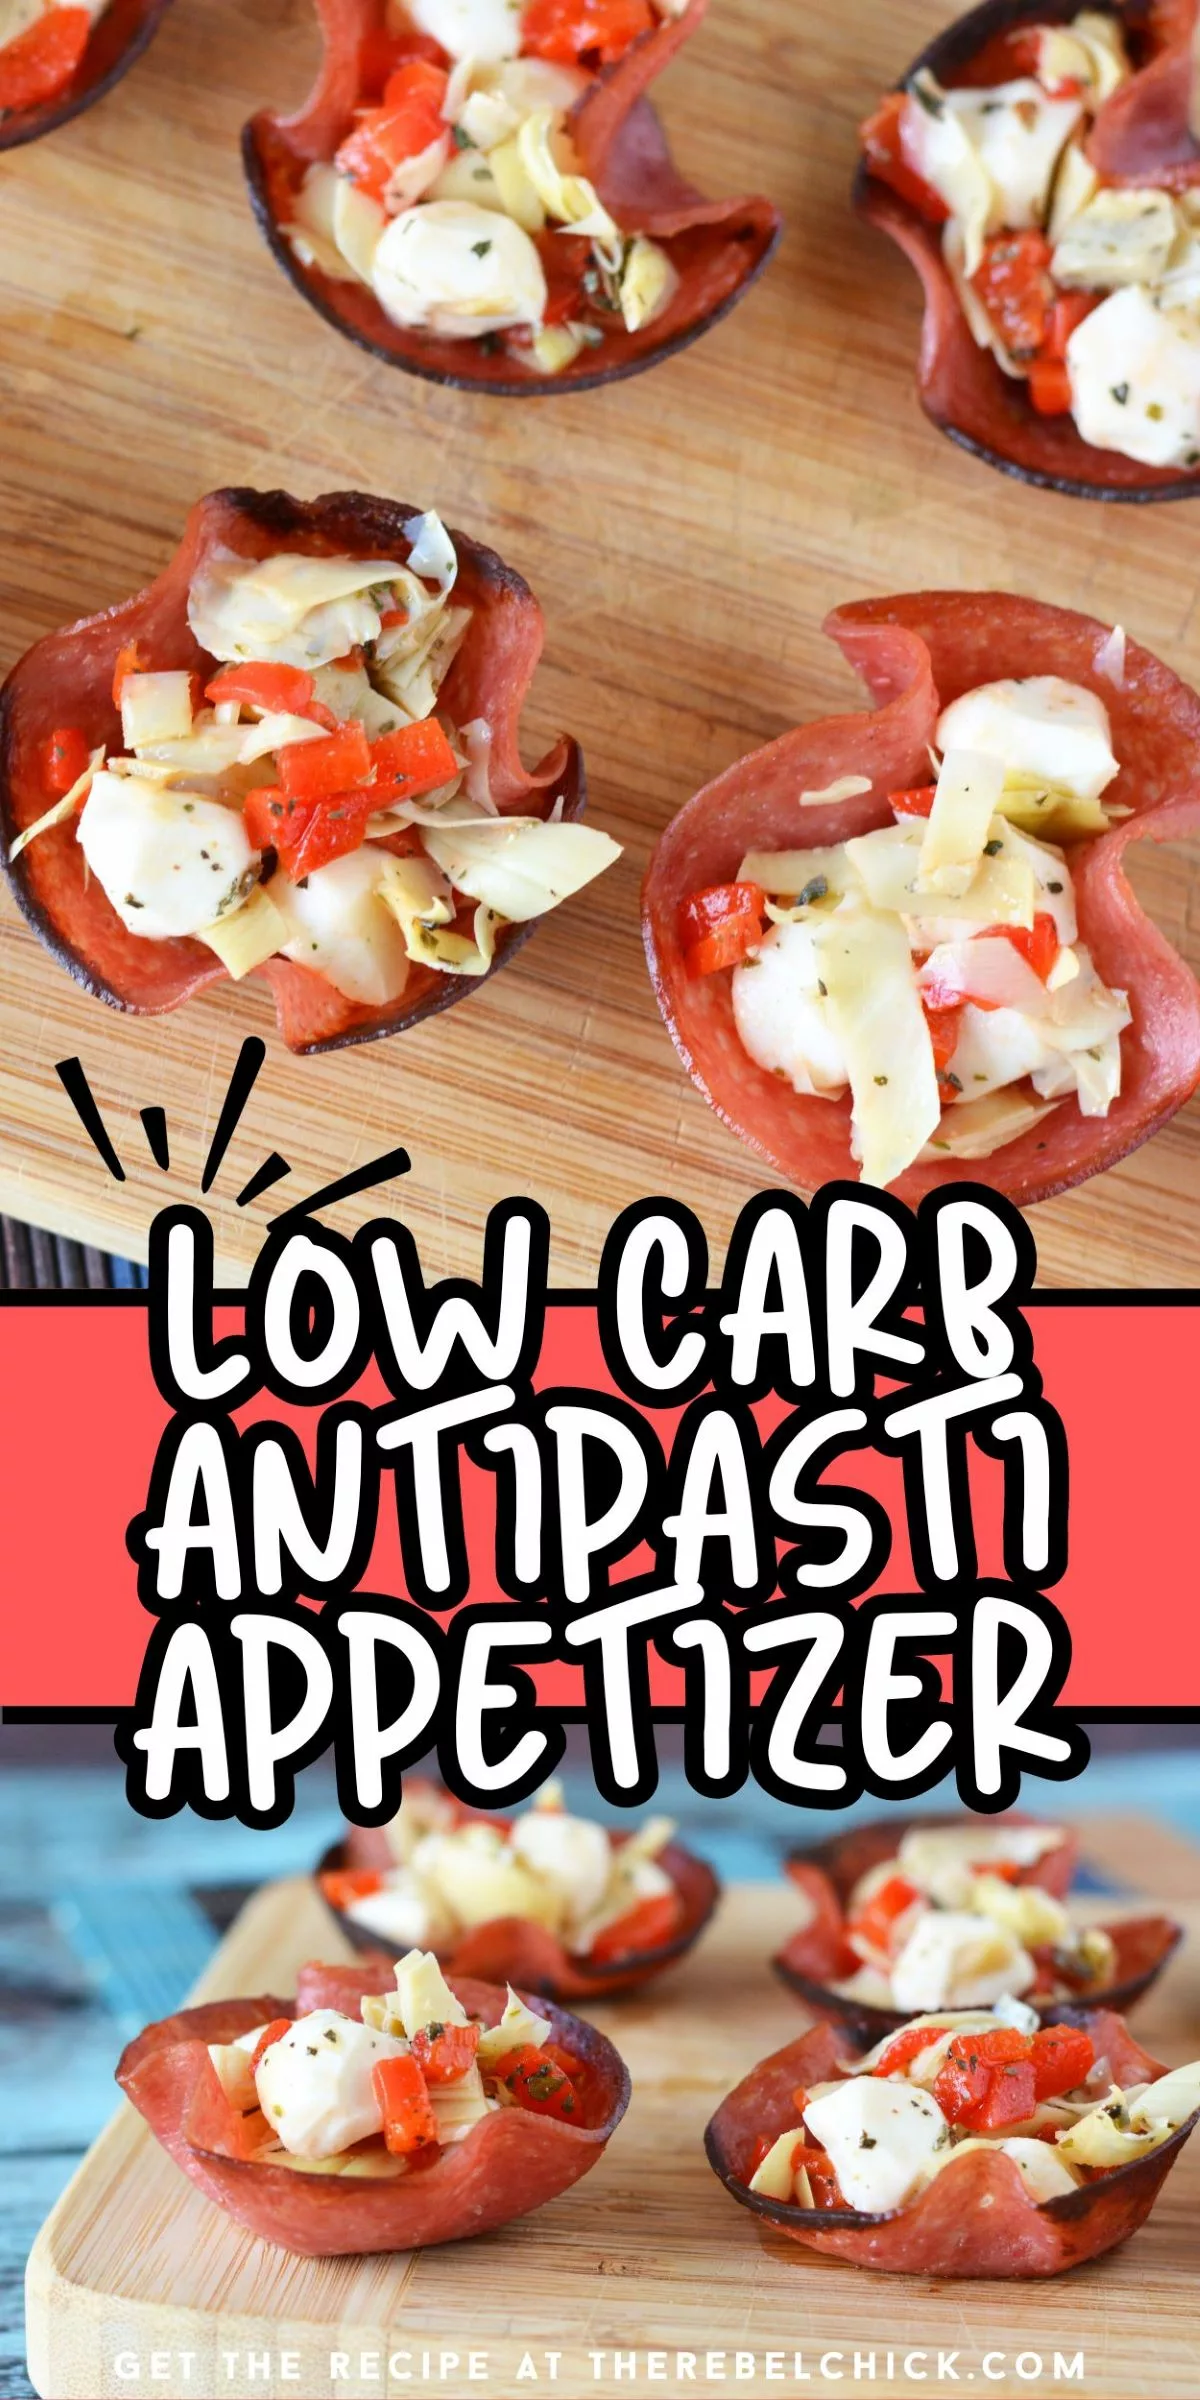 Low Carb Antipasti Appetizer Recipe